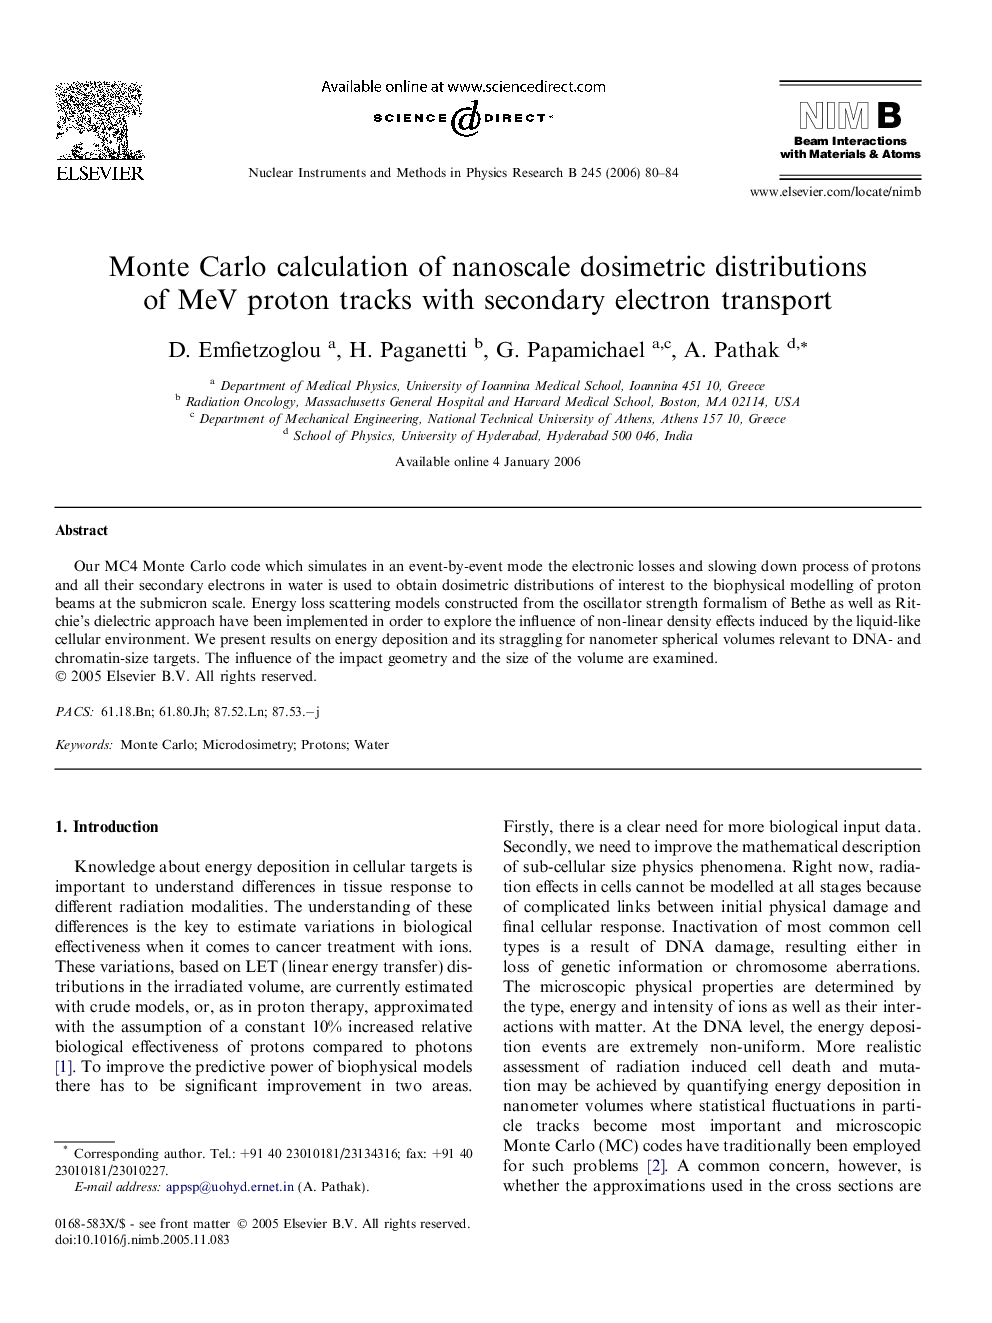 Monte Carlo calculation of nanoscale dosimetric distributions of MeV proton tracks with secondary electron transport